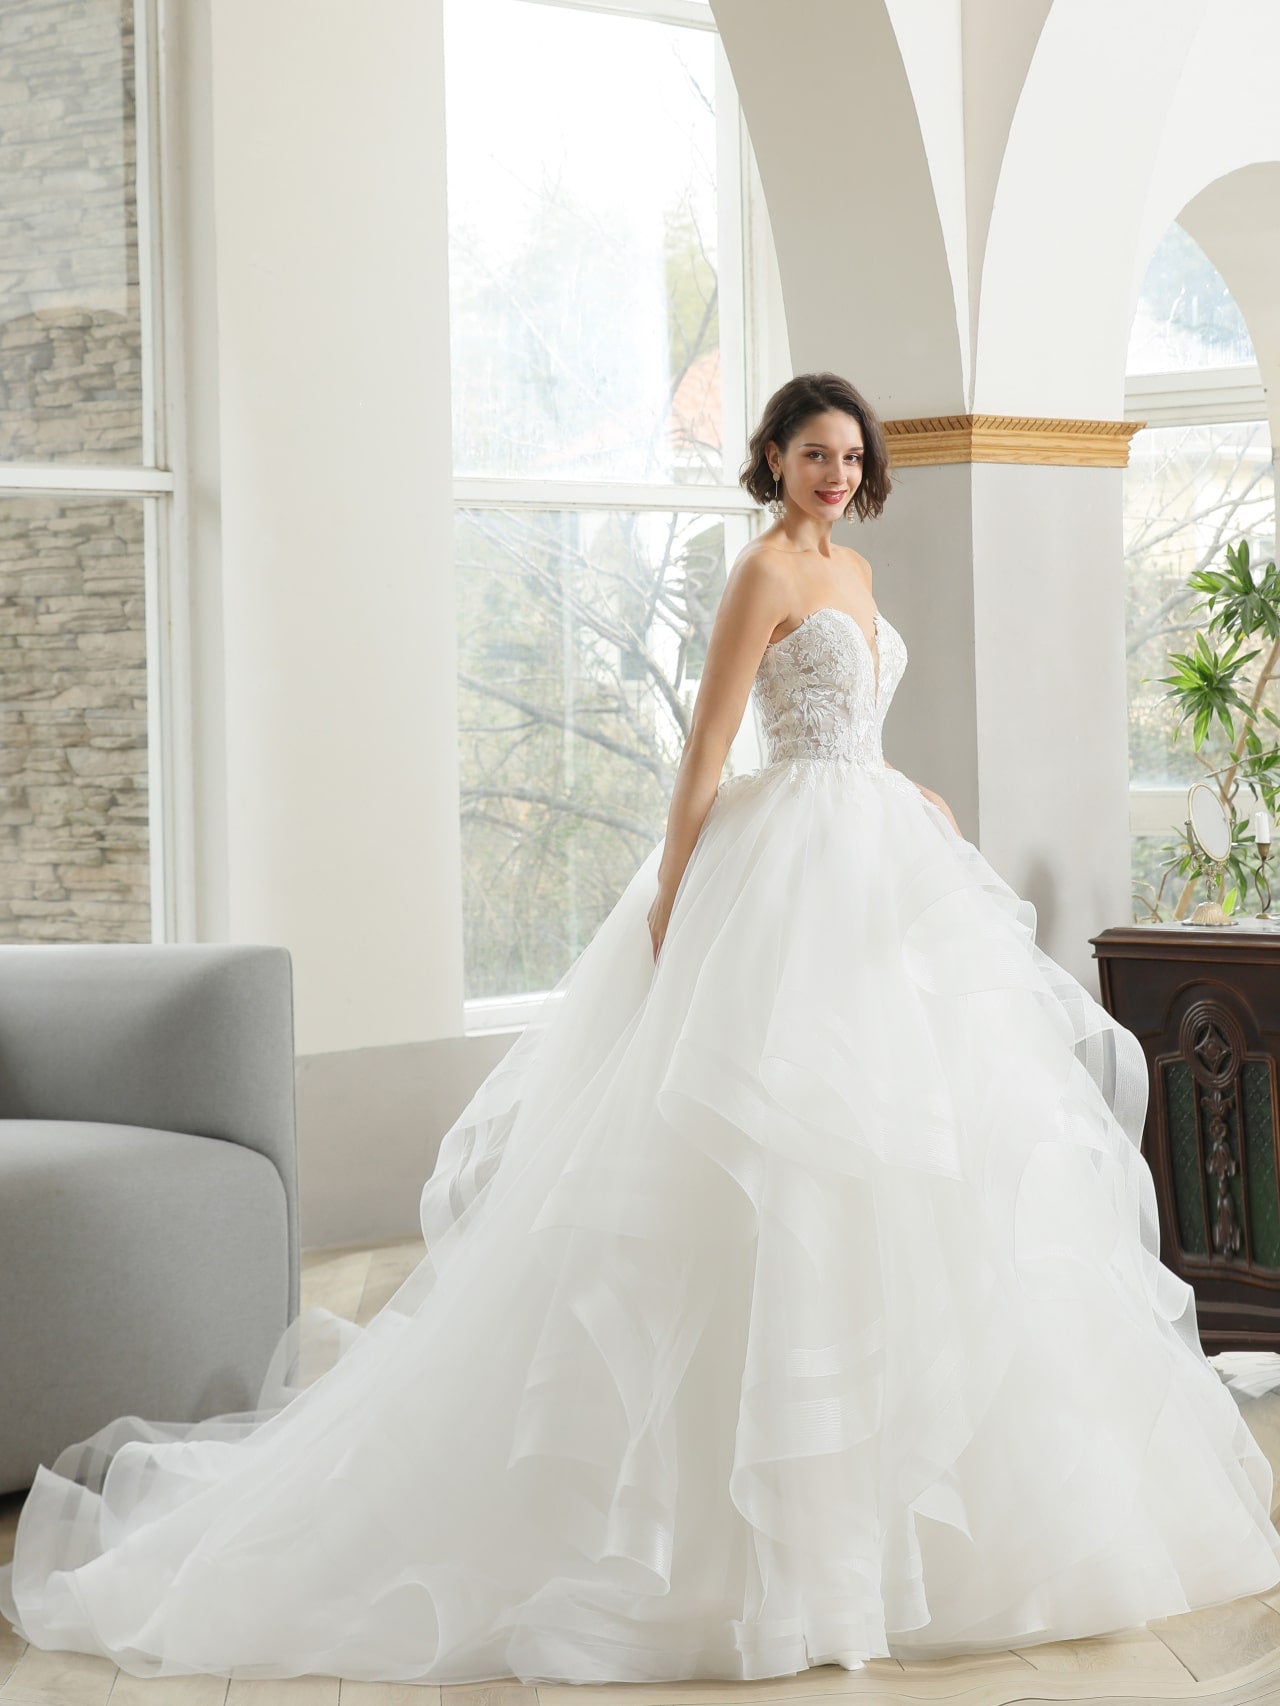 Tiered Organza Skirt Floral Lace Ball Gown Wedding Dress | Bridget